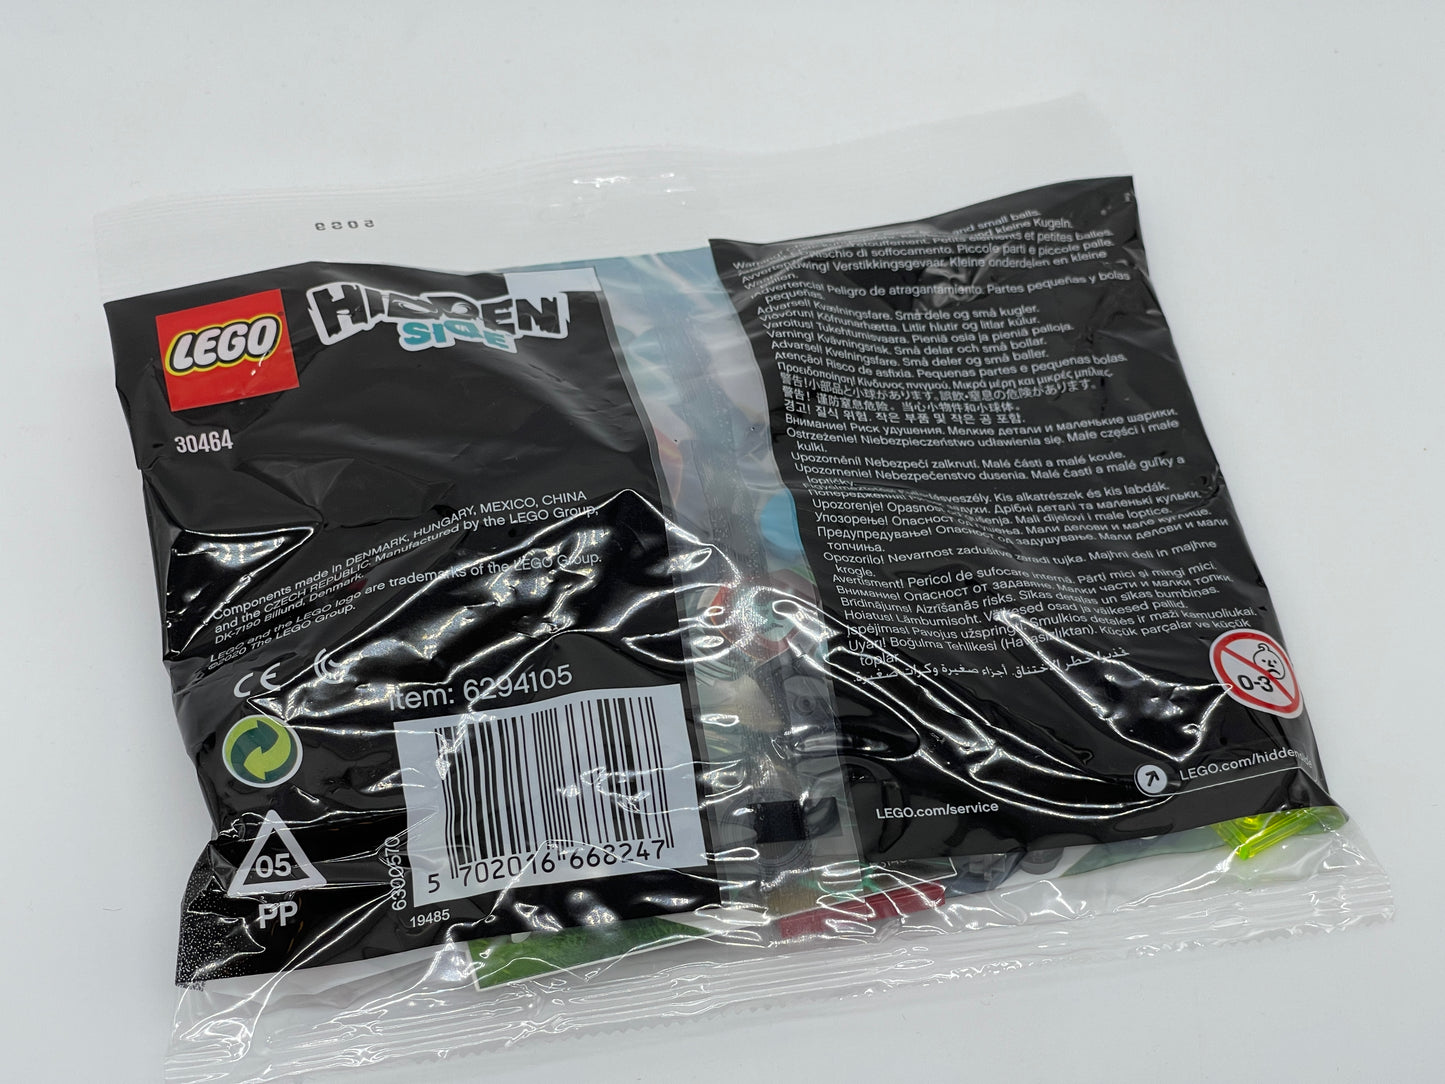 Polybag LEGO Hidden Side 30464 - EL FUEGO STUNT CANNON - 2020